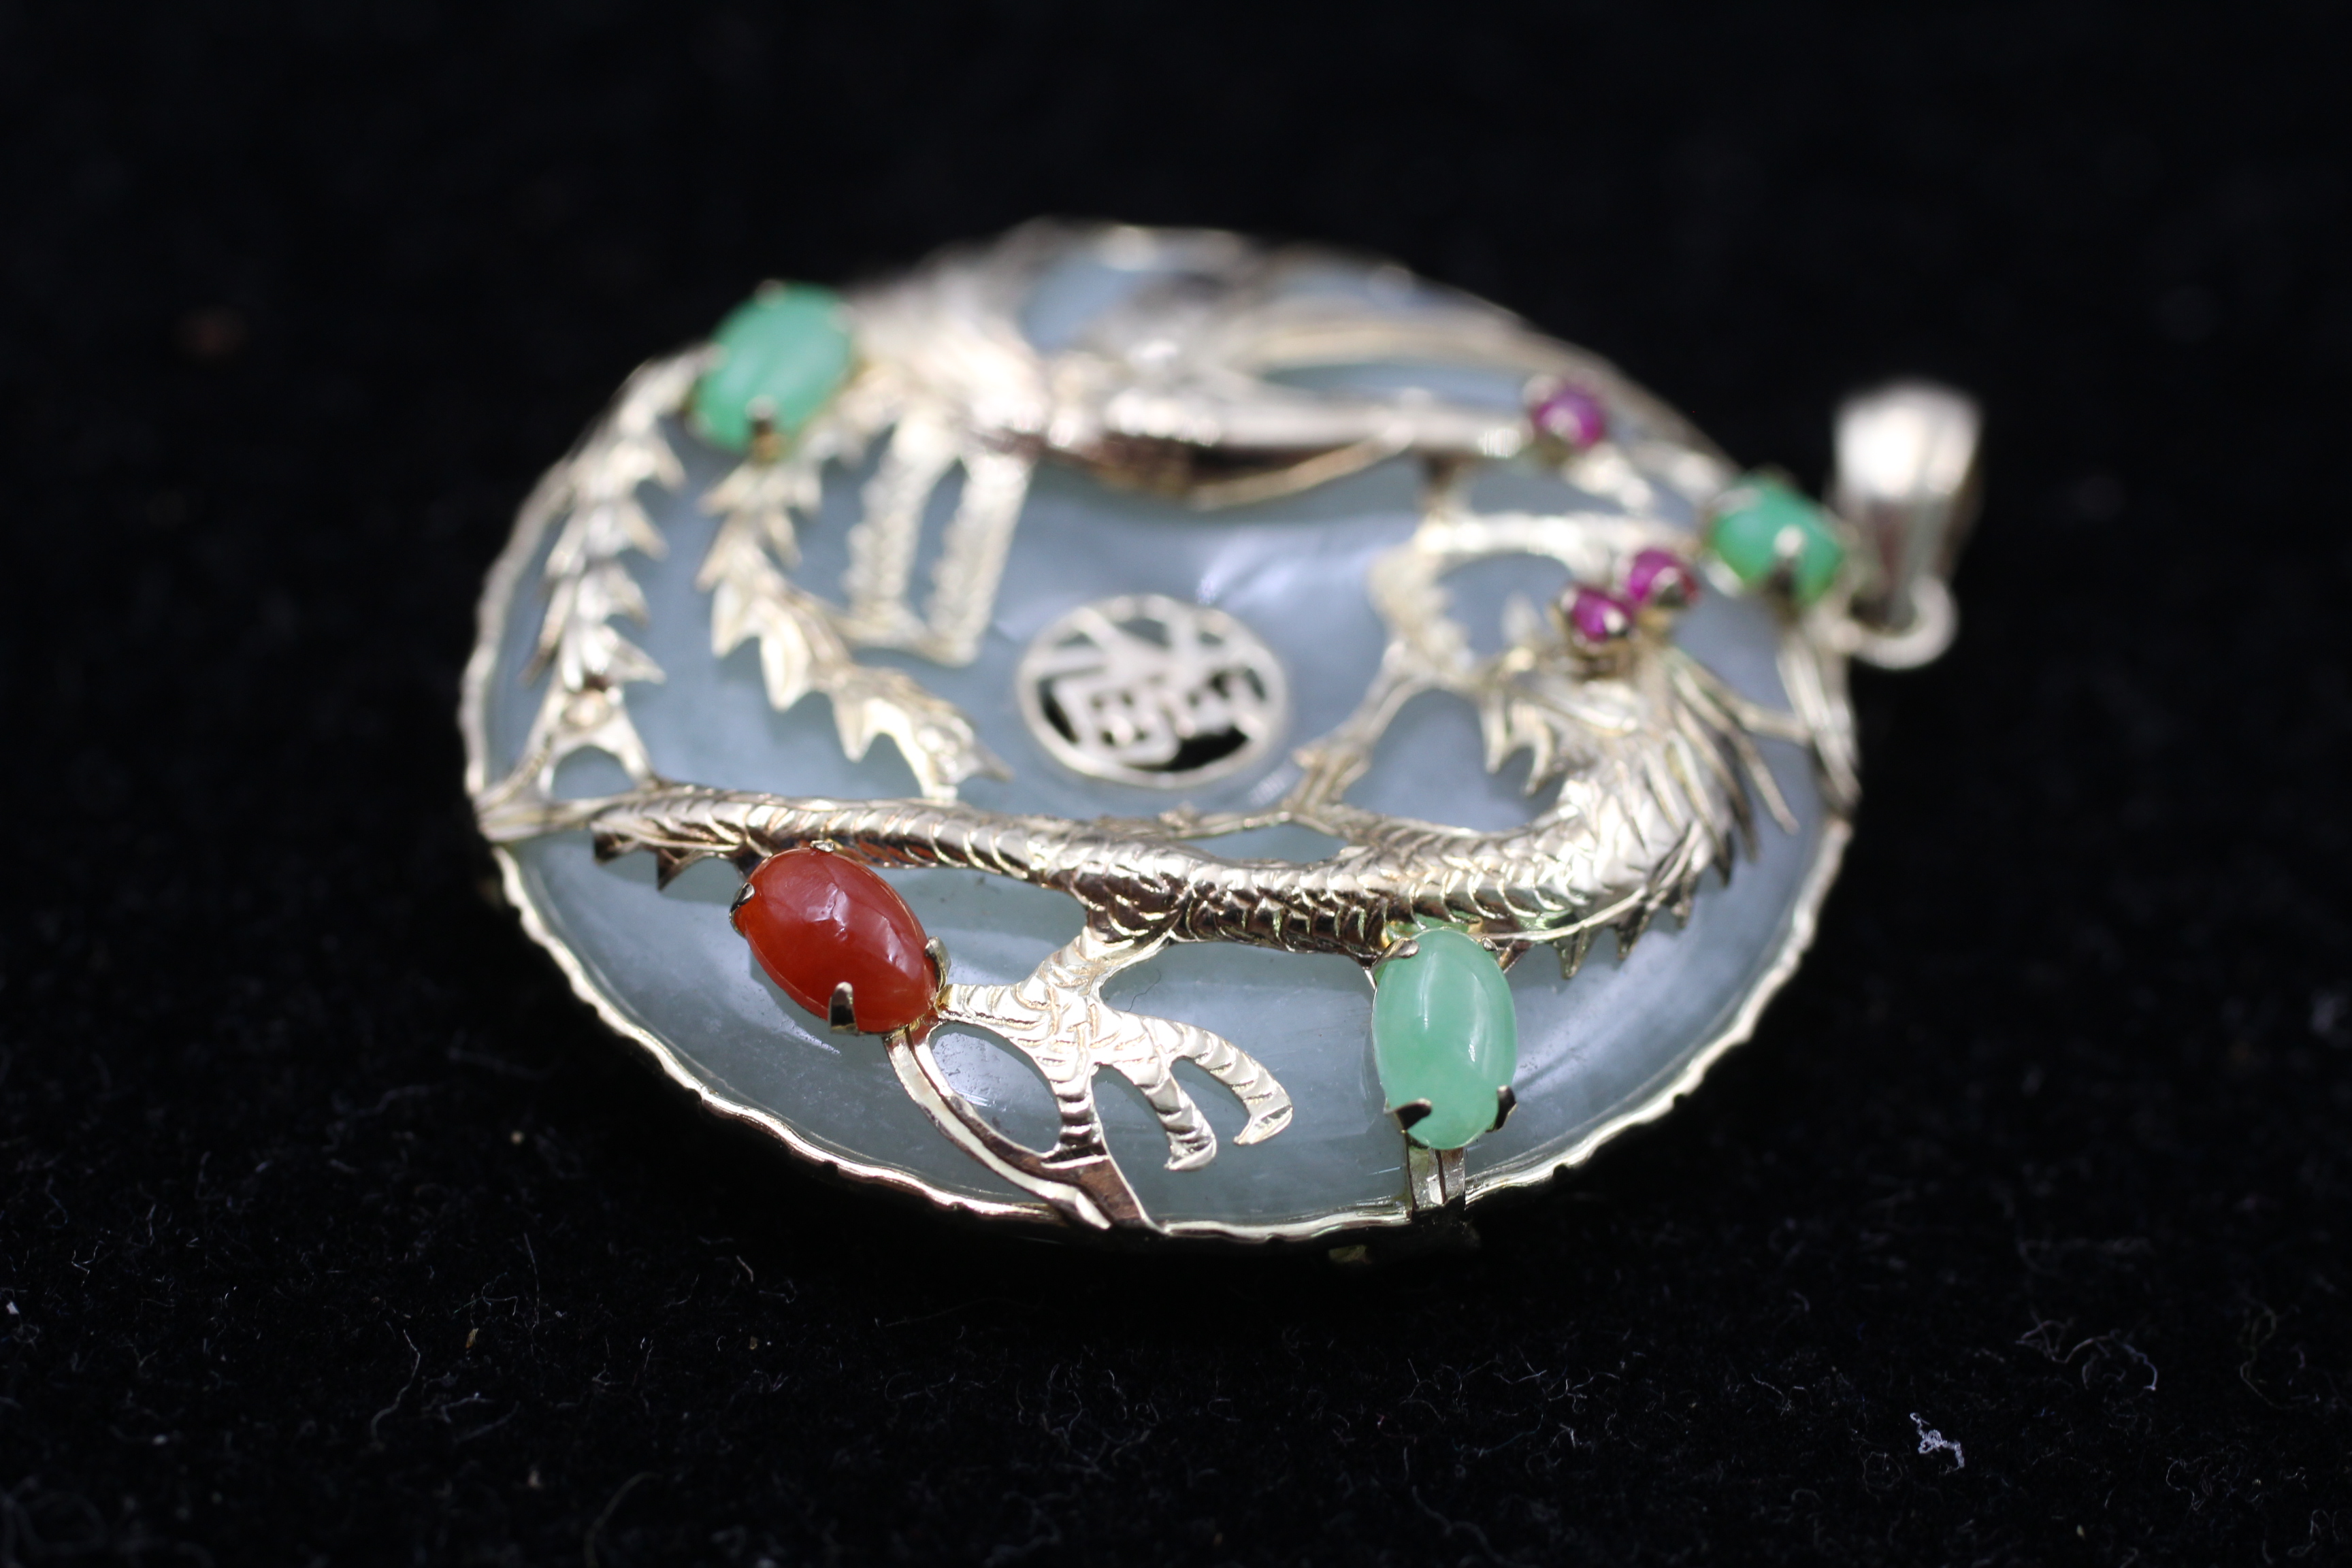 14ct gold ornate jadeite, carnelian, chrysoprase & ruby pendant (10.6g) - Image 2 of 5